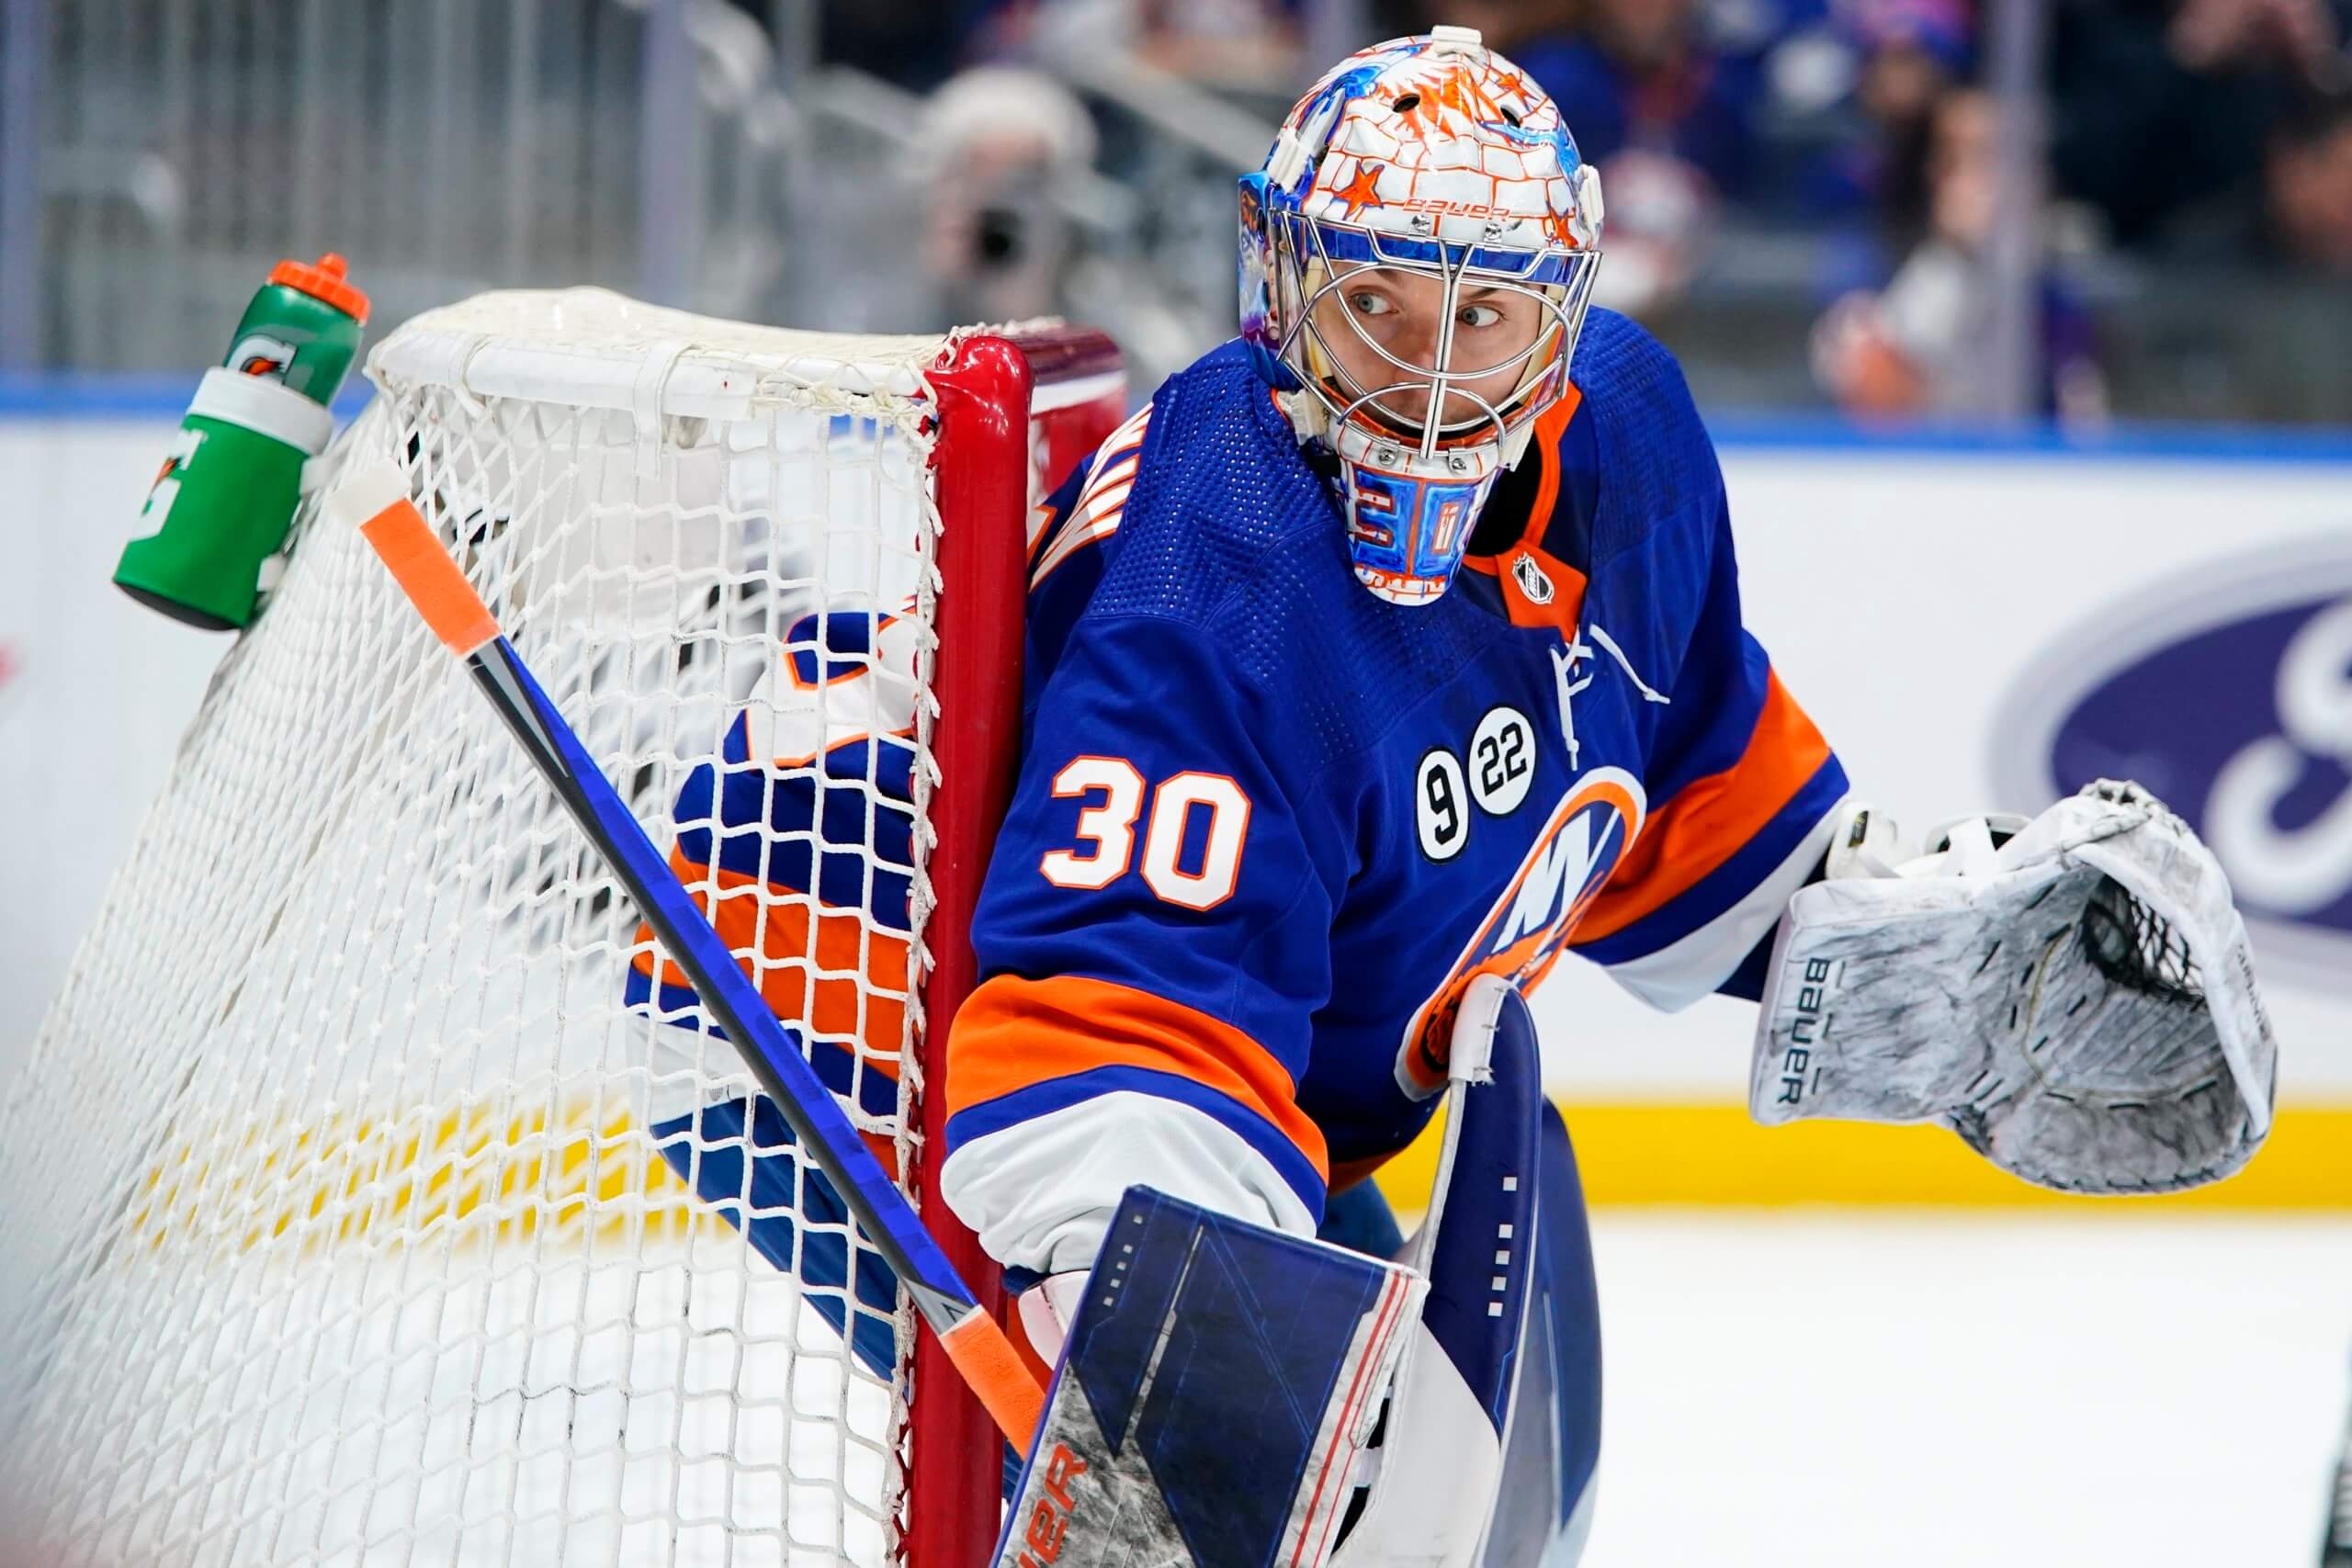 NY Islanders 2022-23 player preview: Noah Dobson